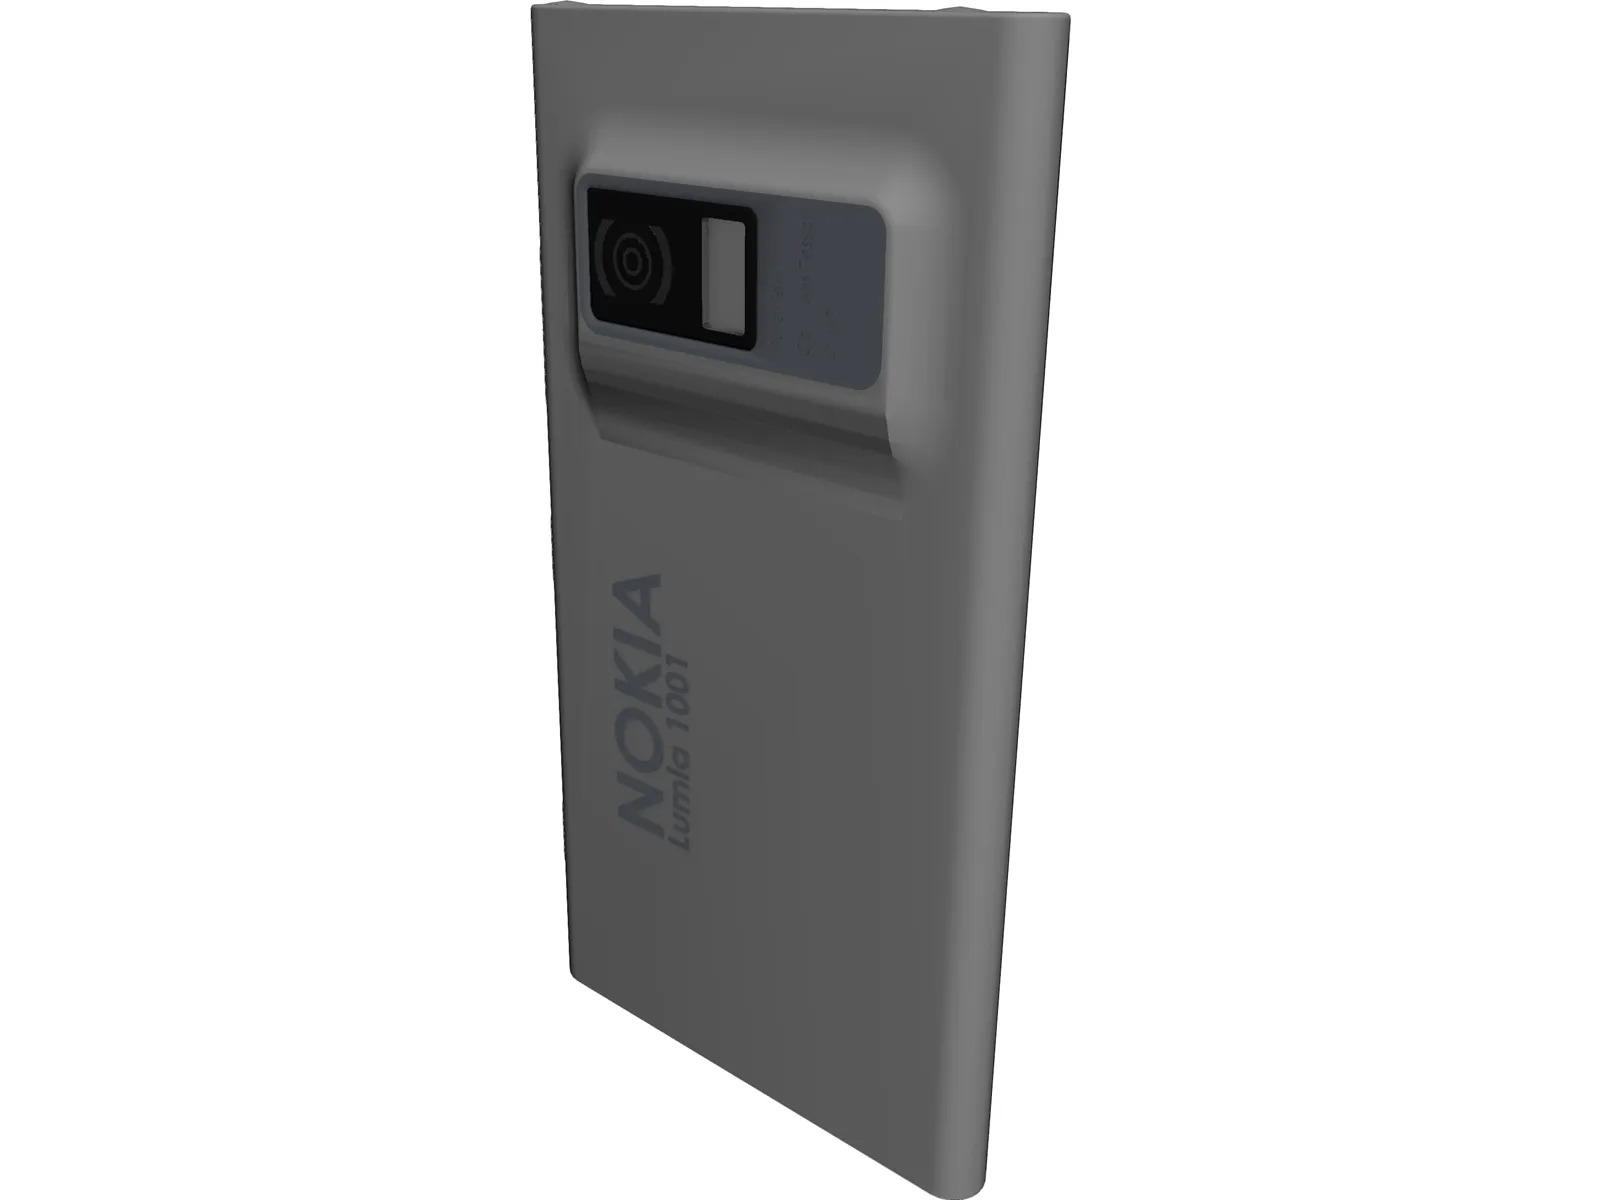 Nokia Lumia 1001 3D Model